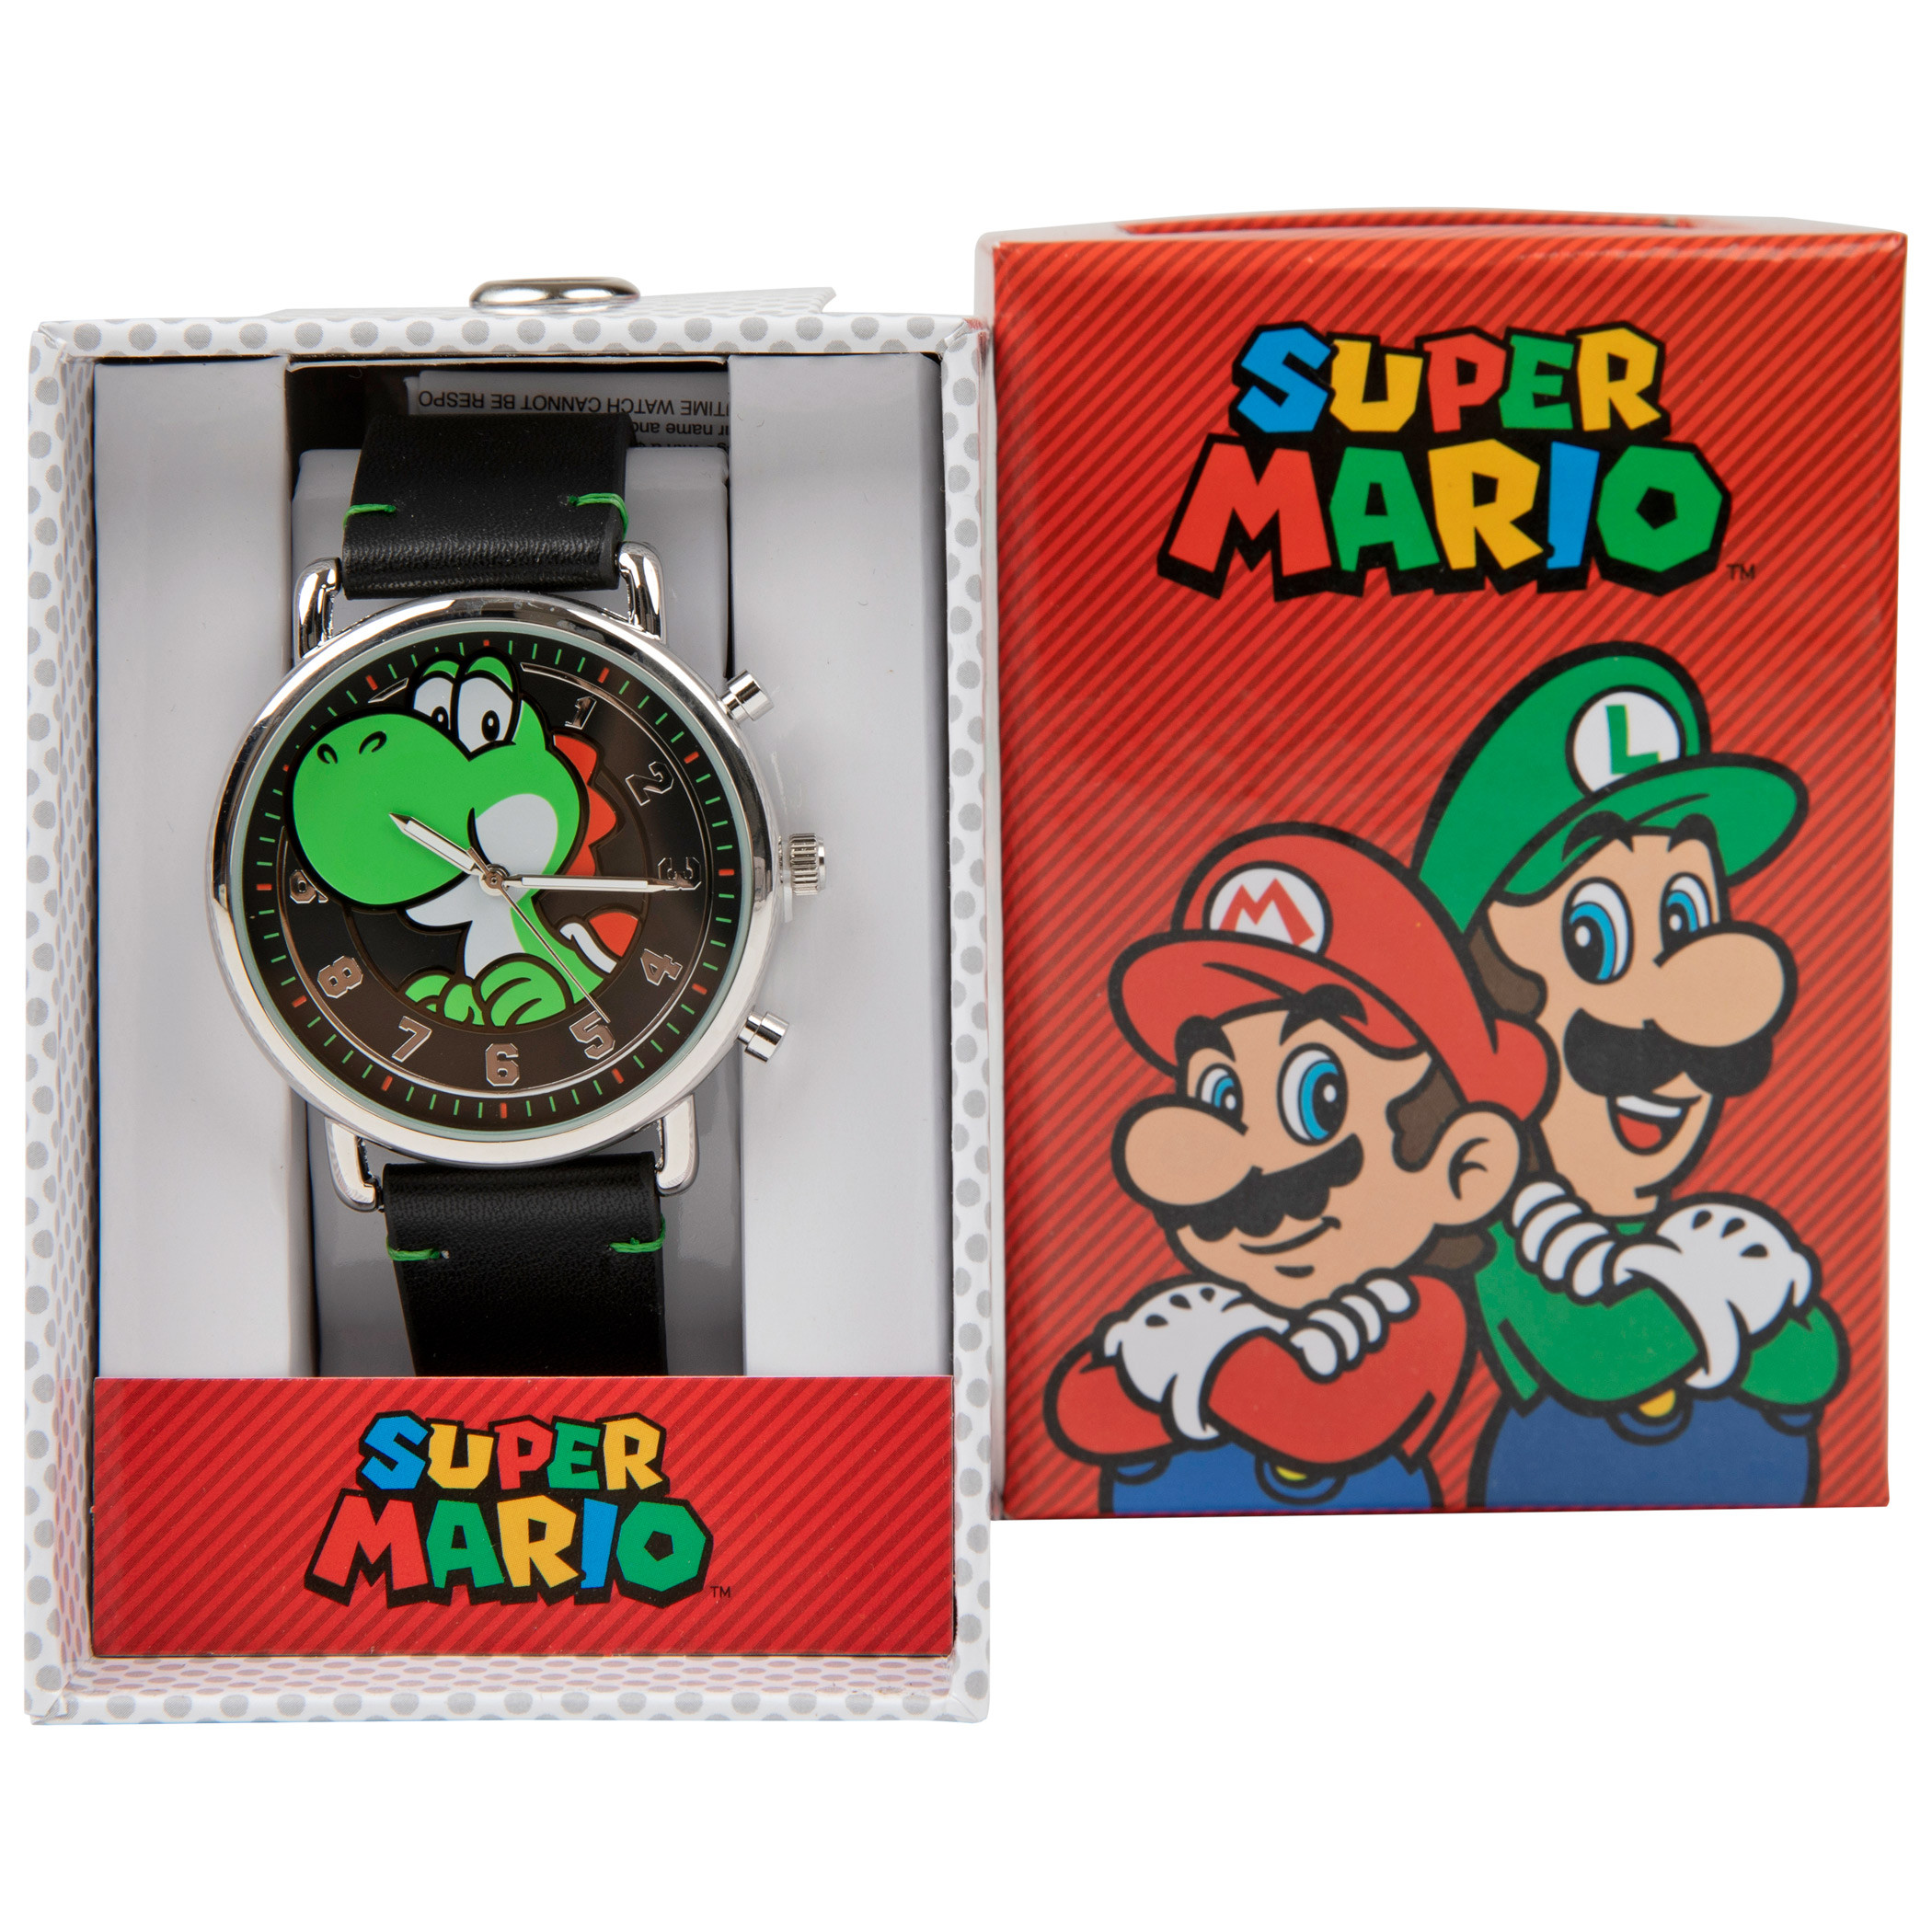 Yoshi Super Mario Nintendo Character Watch